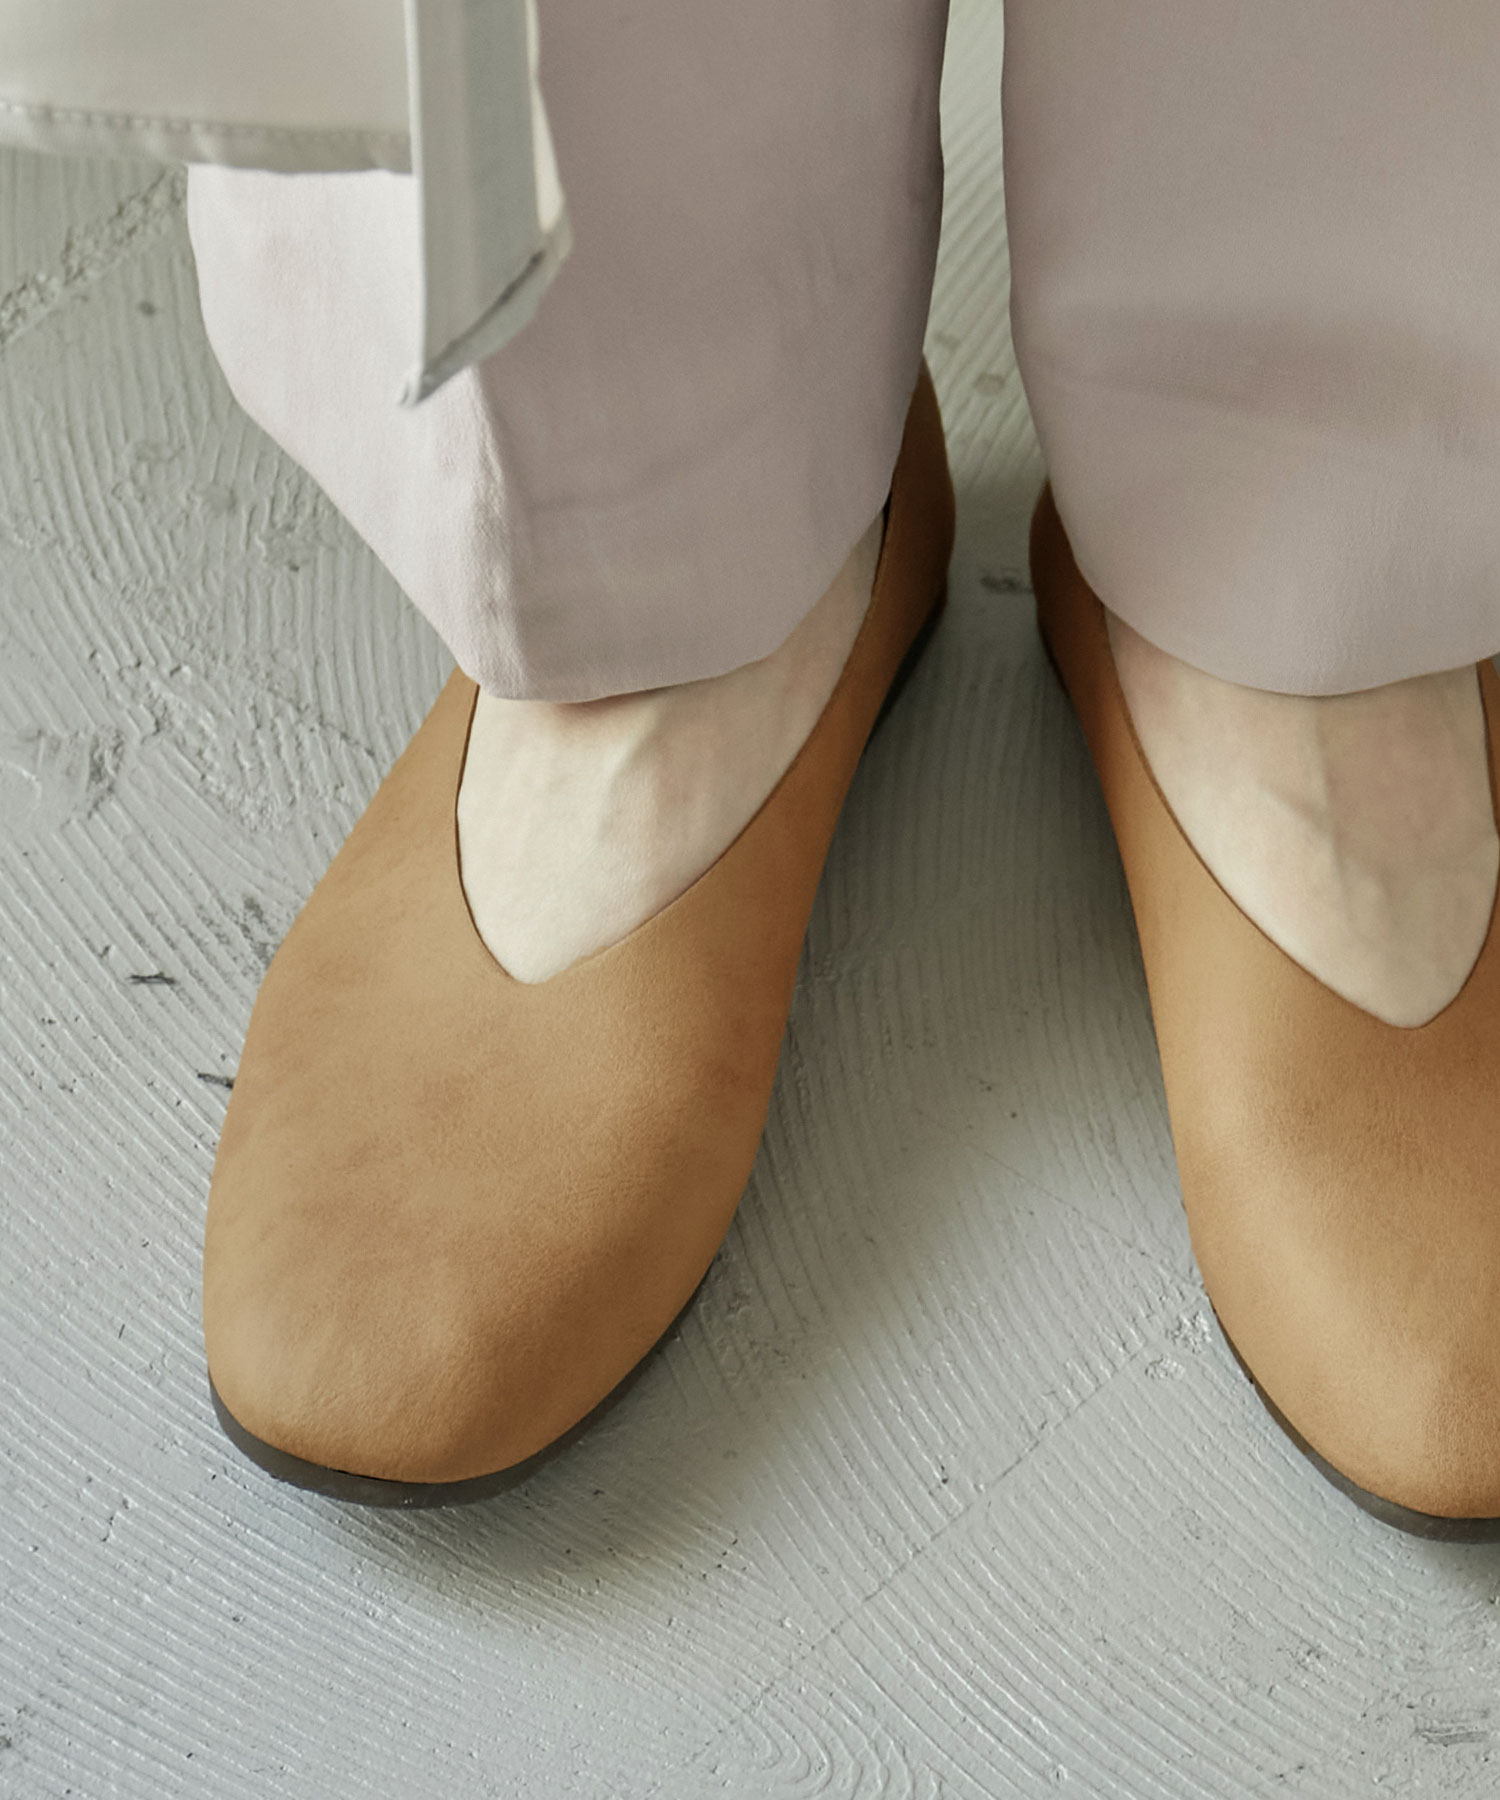 Vカットフラットパンプス 日本製 パンプス 痛くない 歩きやすい ローヒール フラット レディース ぺたんこ 柔らかい シューズ 靴 合皮(504165103)  | エトル(etoll.) - MAGASEEK